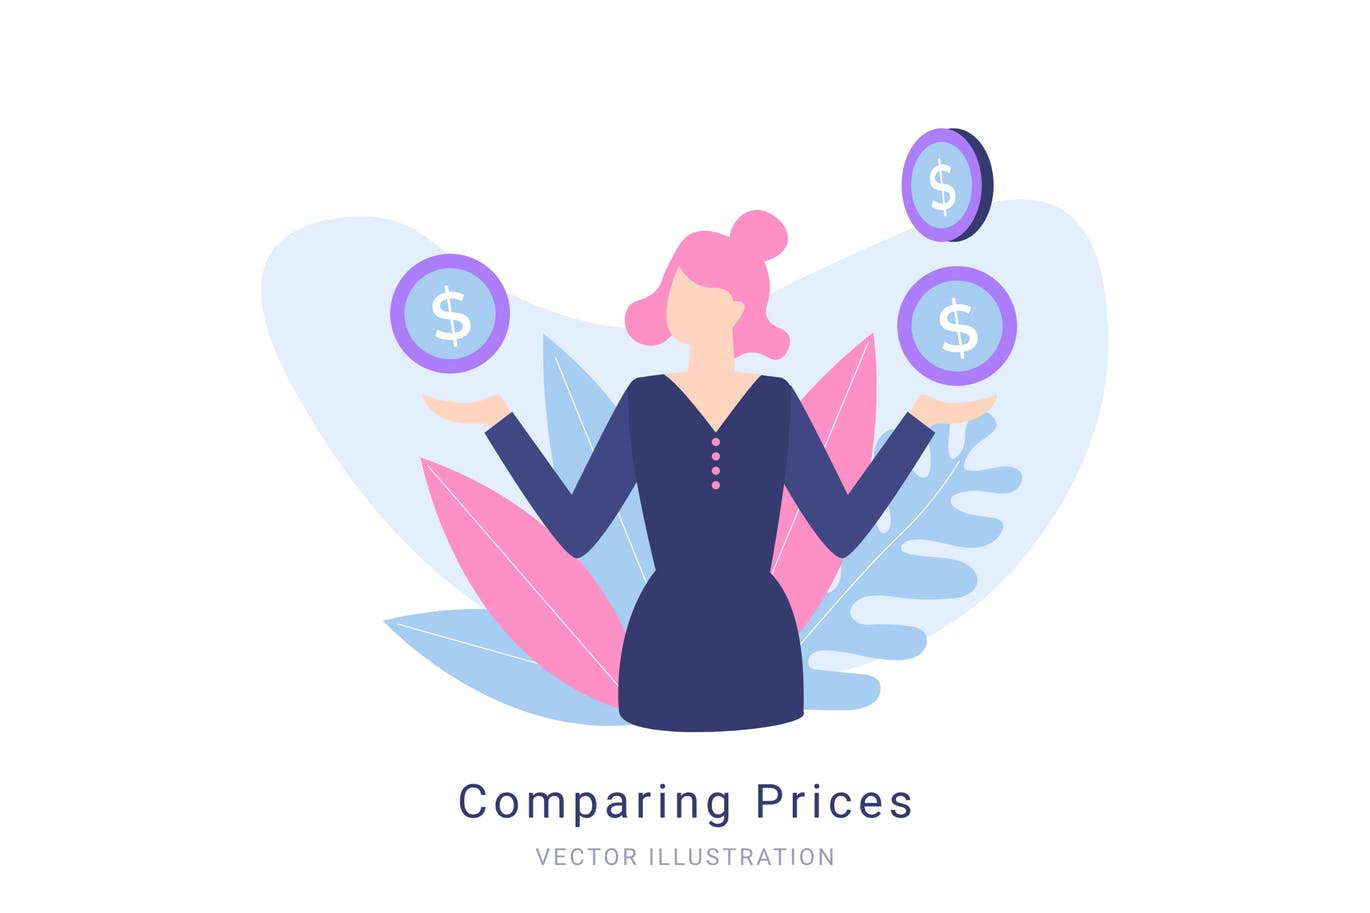 价格比较概念矢量插画非凡图库精选素材 Comparing Prices Vector Illustration插图